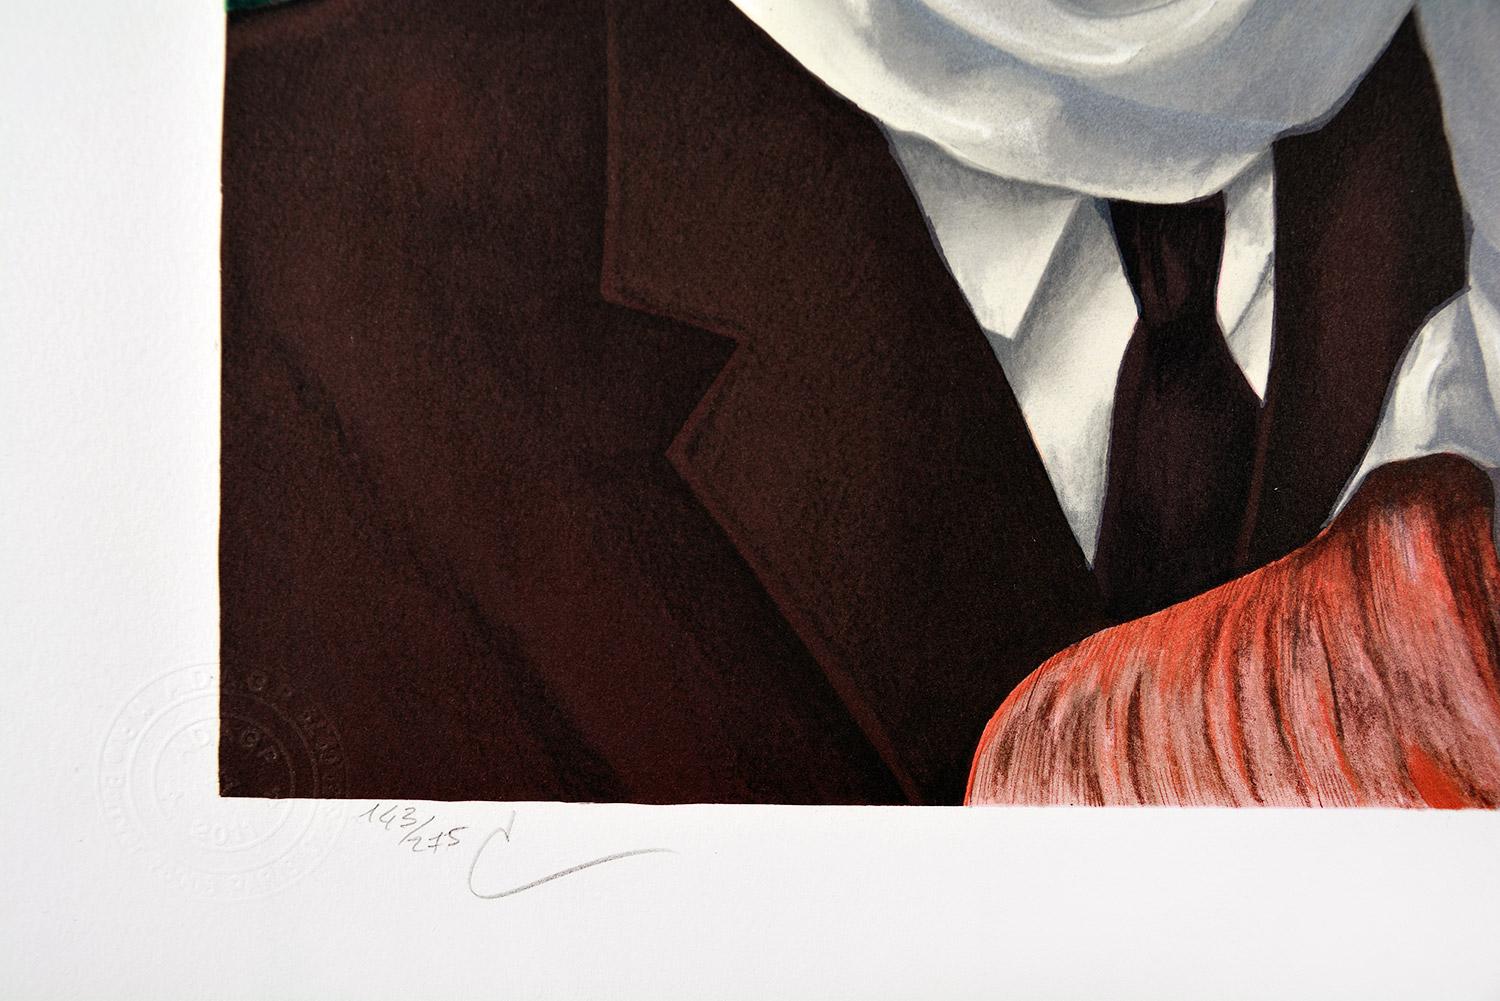 René Magritte - LES AMANTS Limited Surrealism French Art Contemporary - Surrealist Print by (after) René Magritte